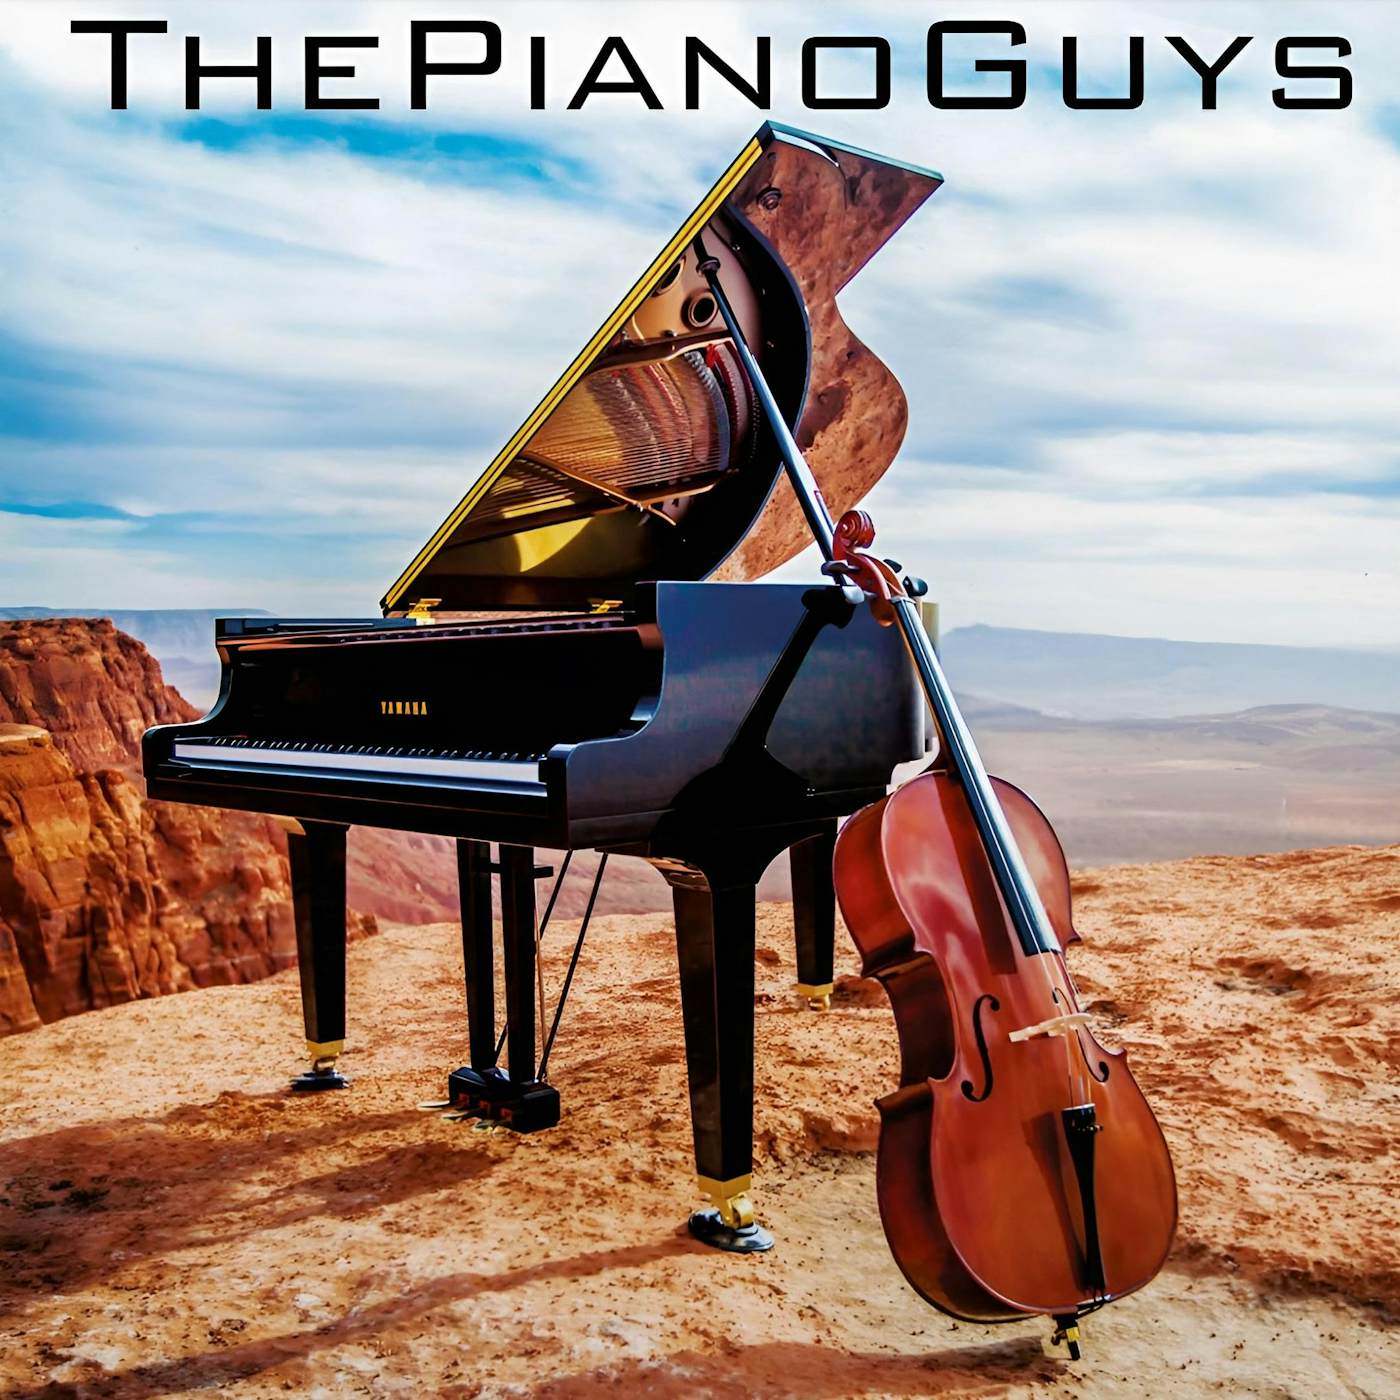  The Piano Guys Vinyl Record